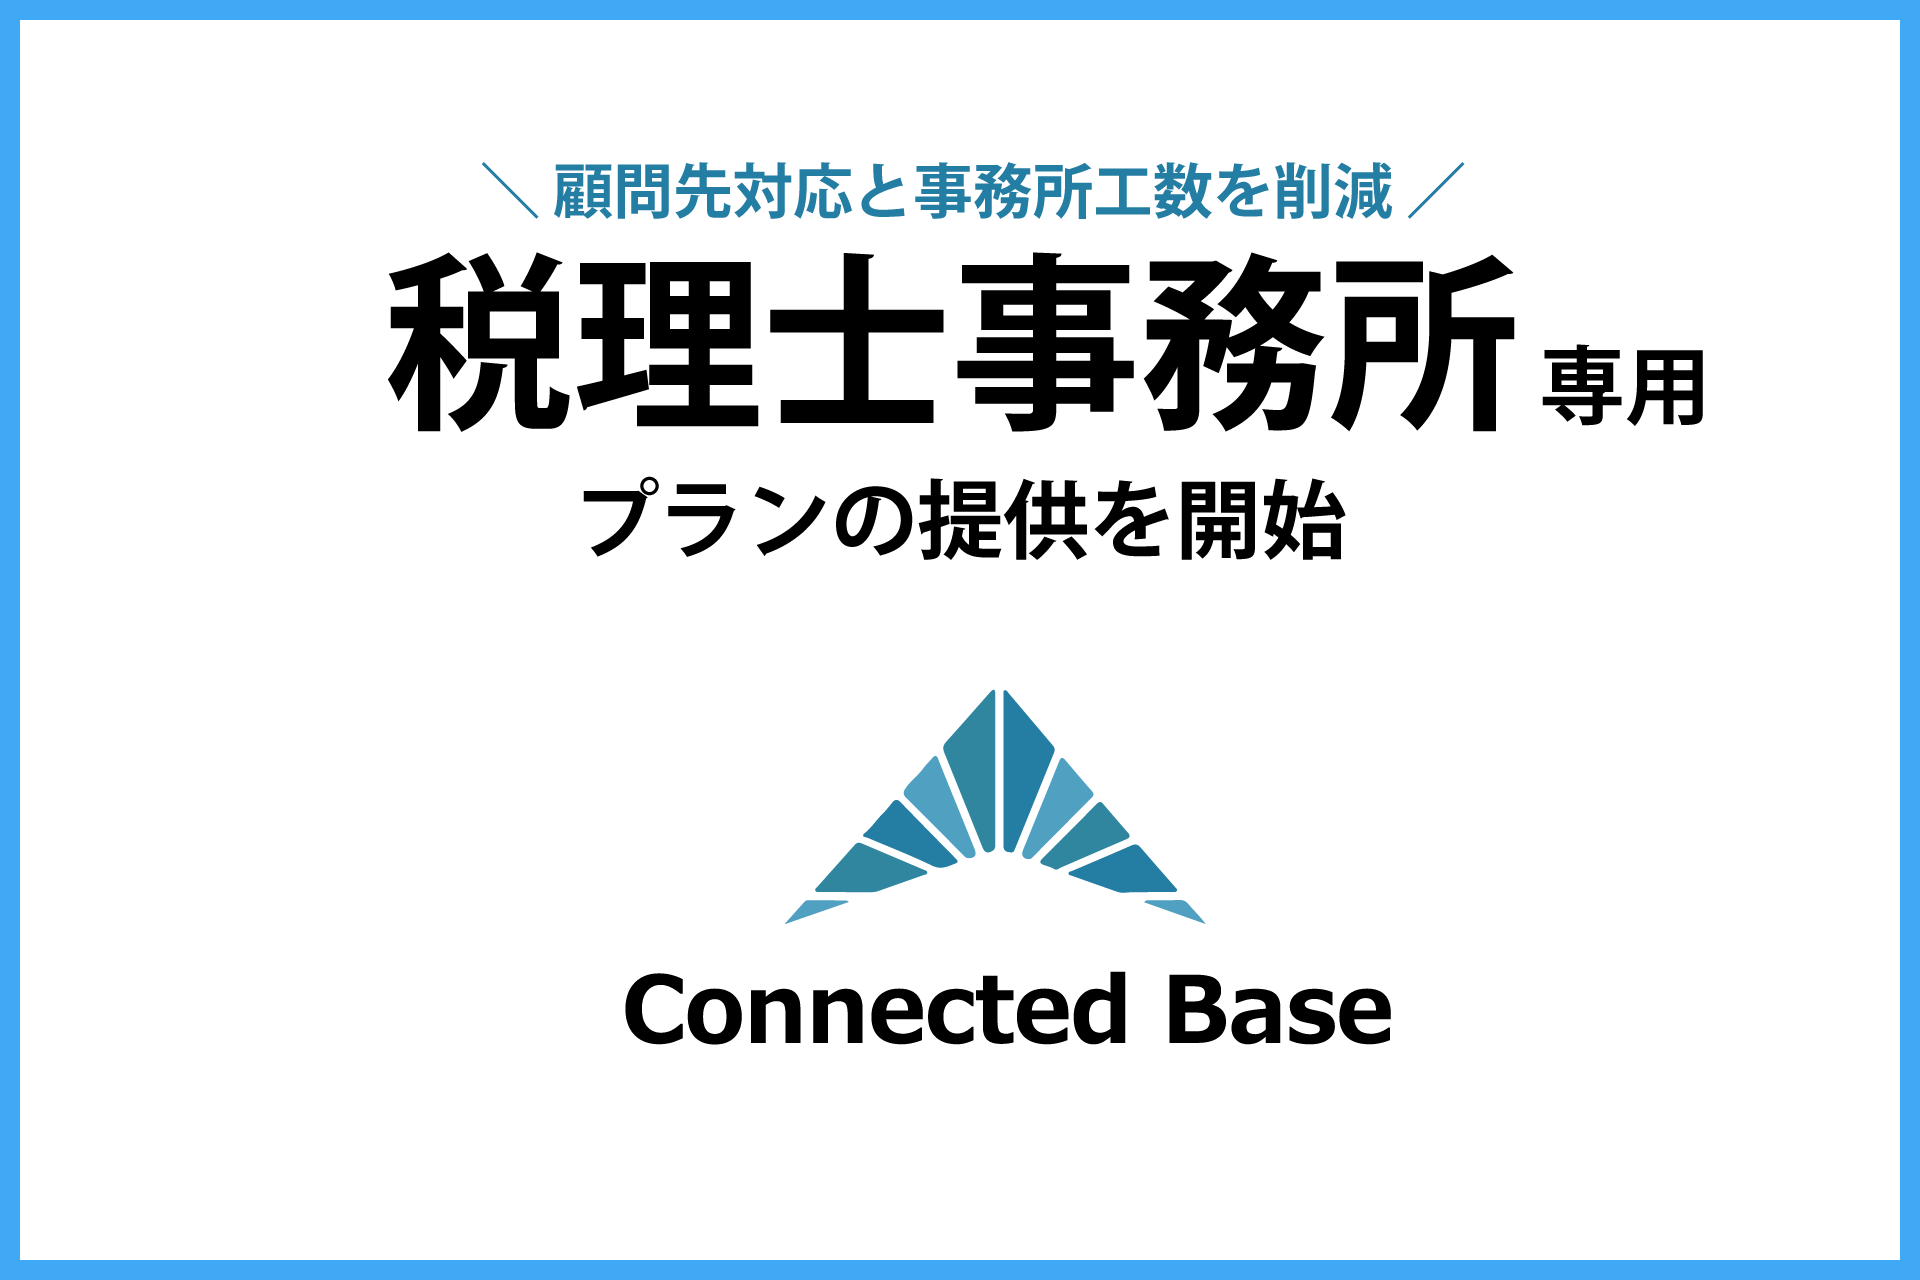 Connected Base for 電子帳簿保存法に『税理士事務所向けプラン』の提供を開始